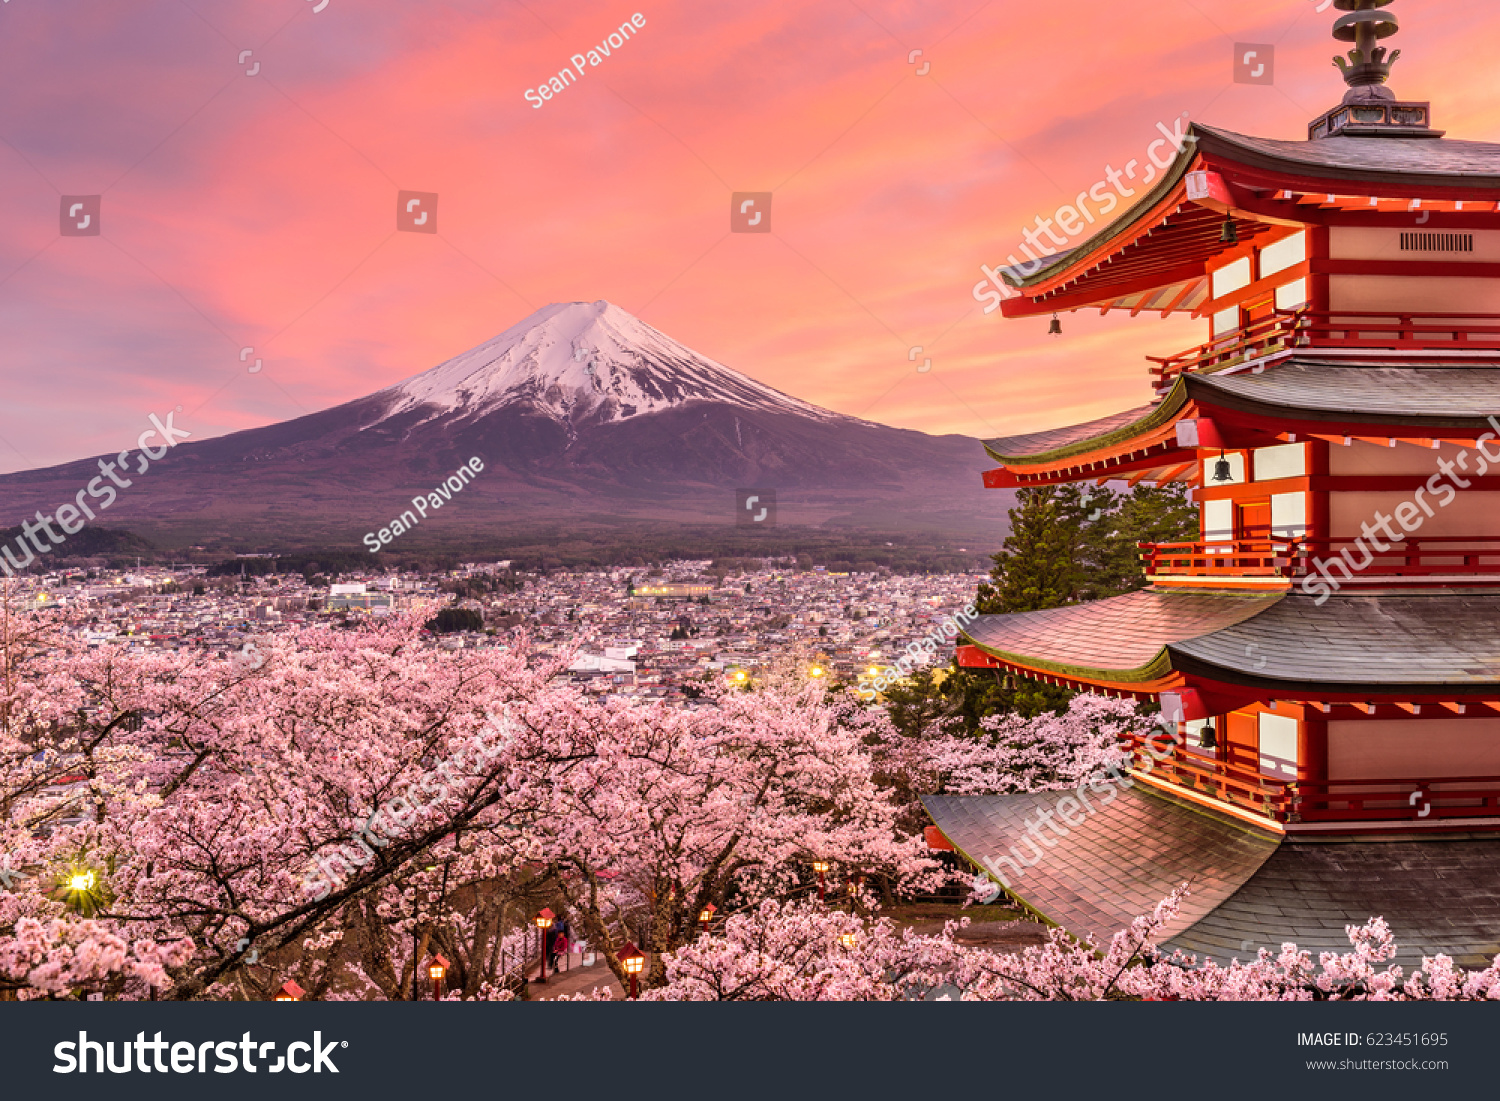 powerpoint-template-asia-fujiyoshida-japan-at-chureito-pagoda